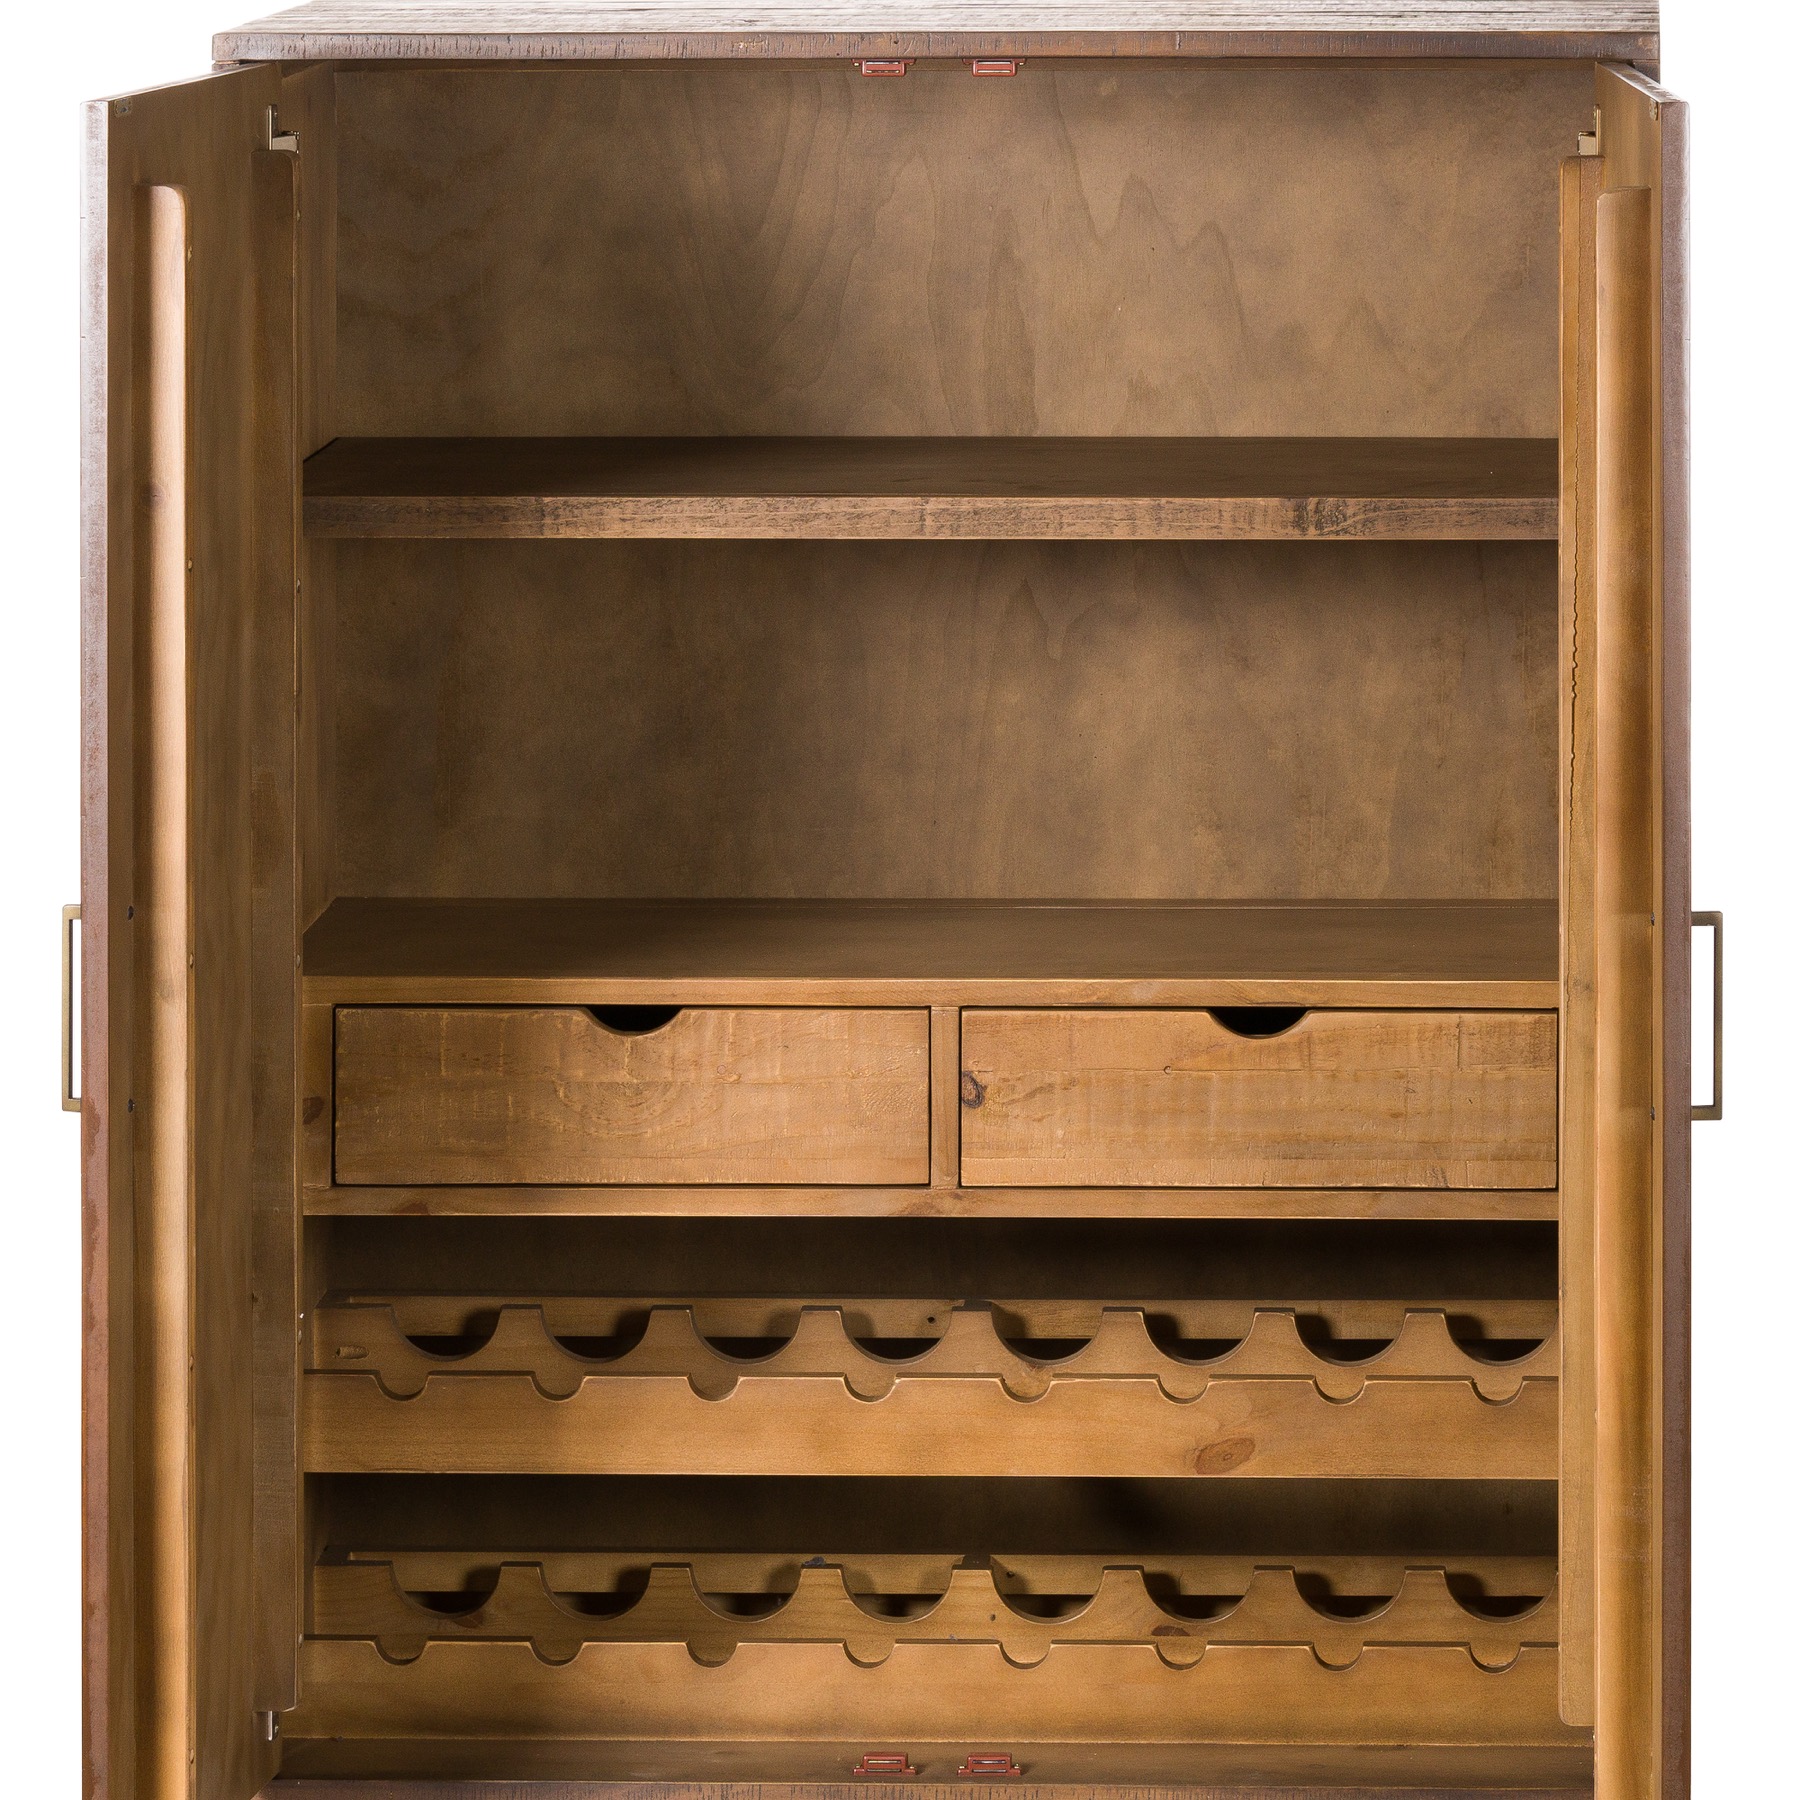 Havana Gold Drinks Cabinet - Image 2